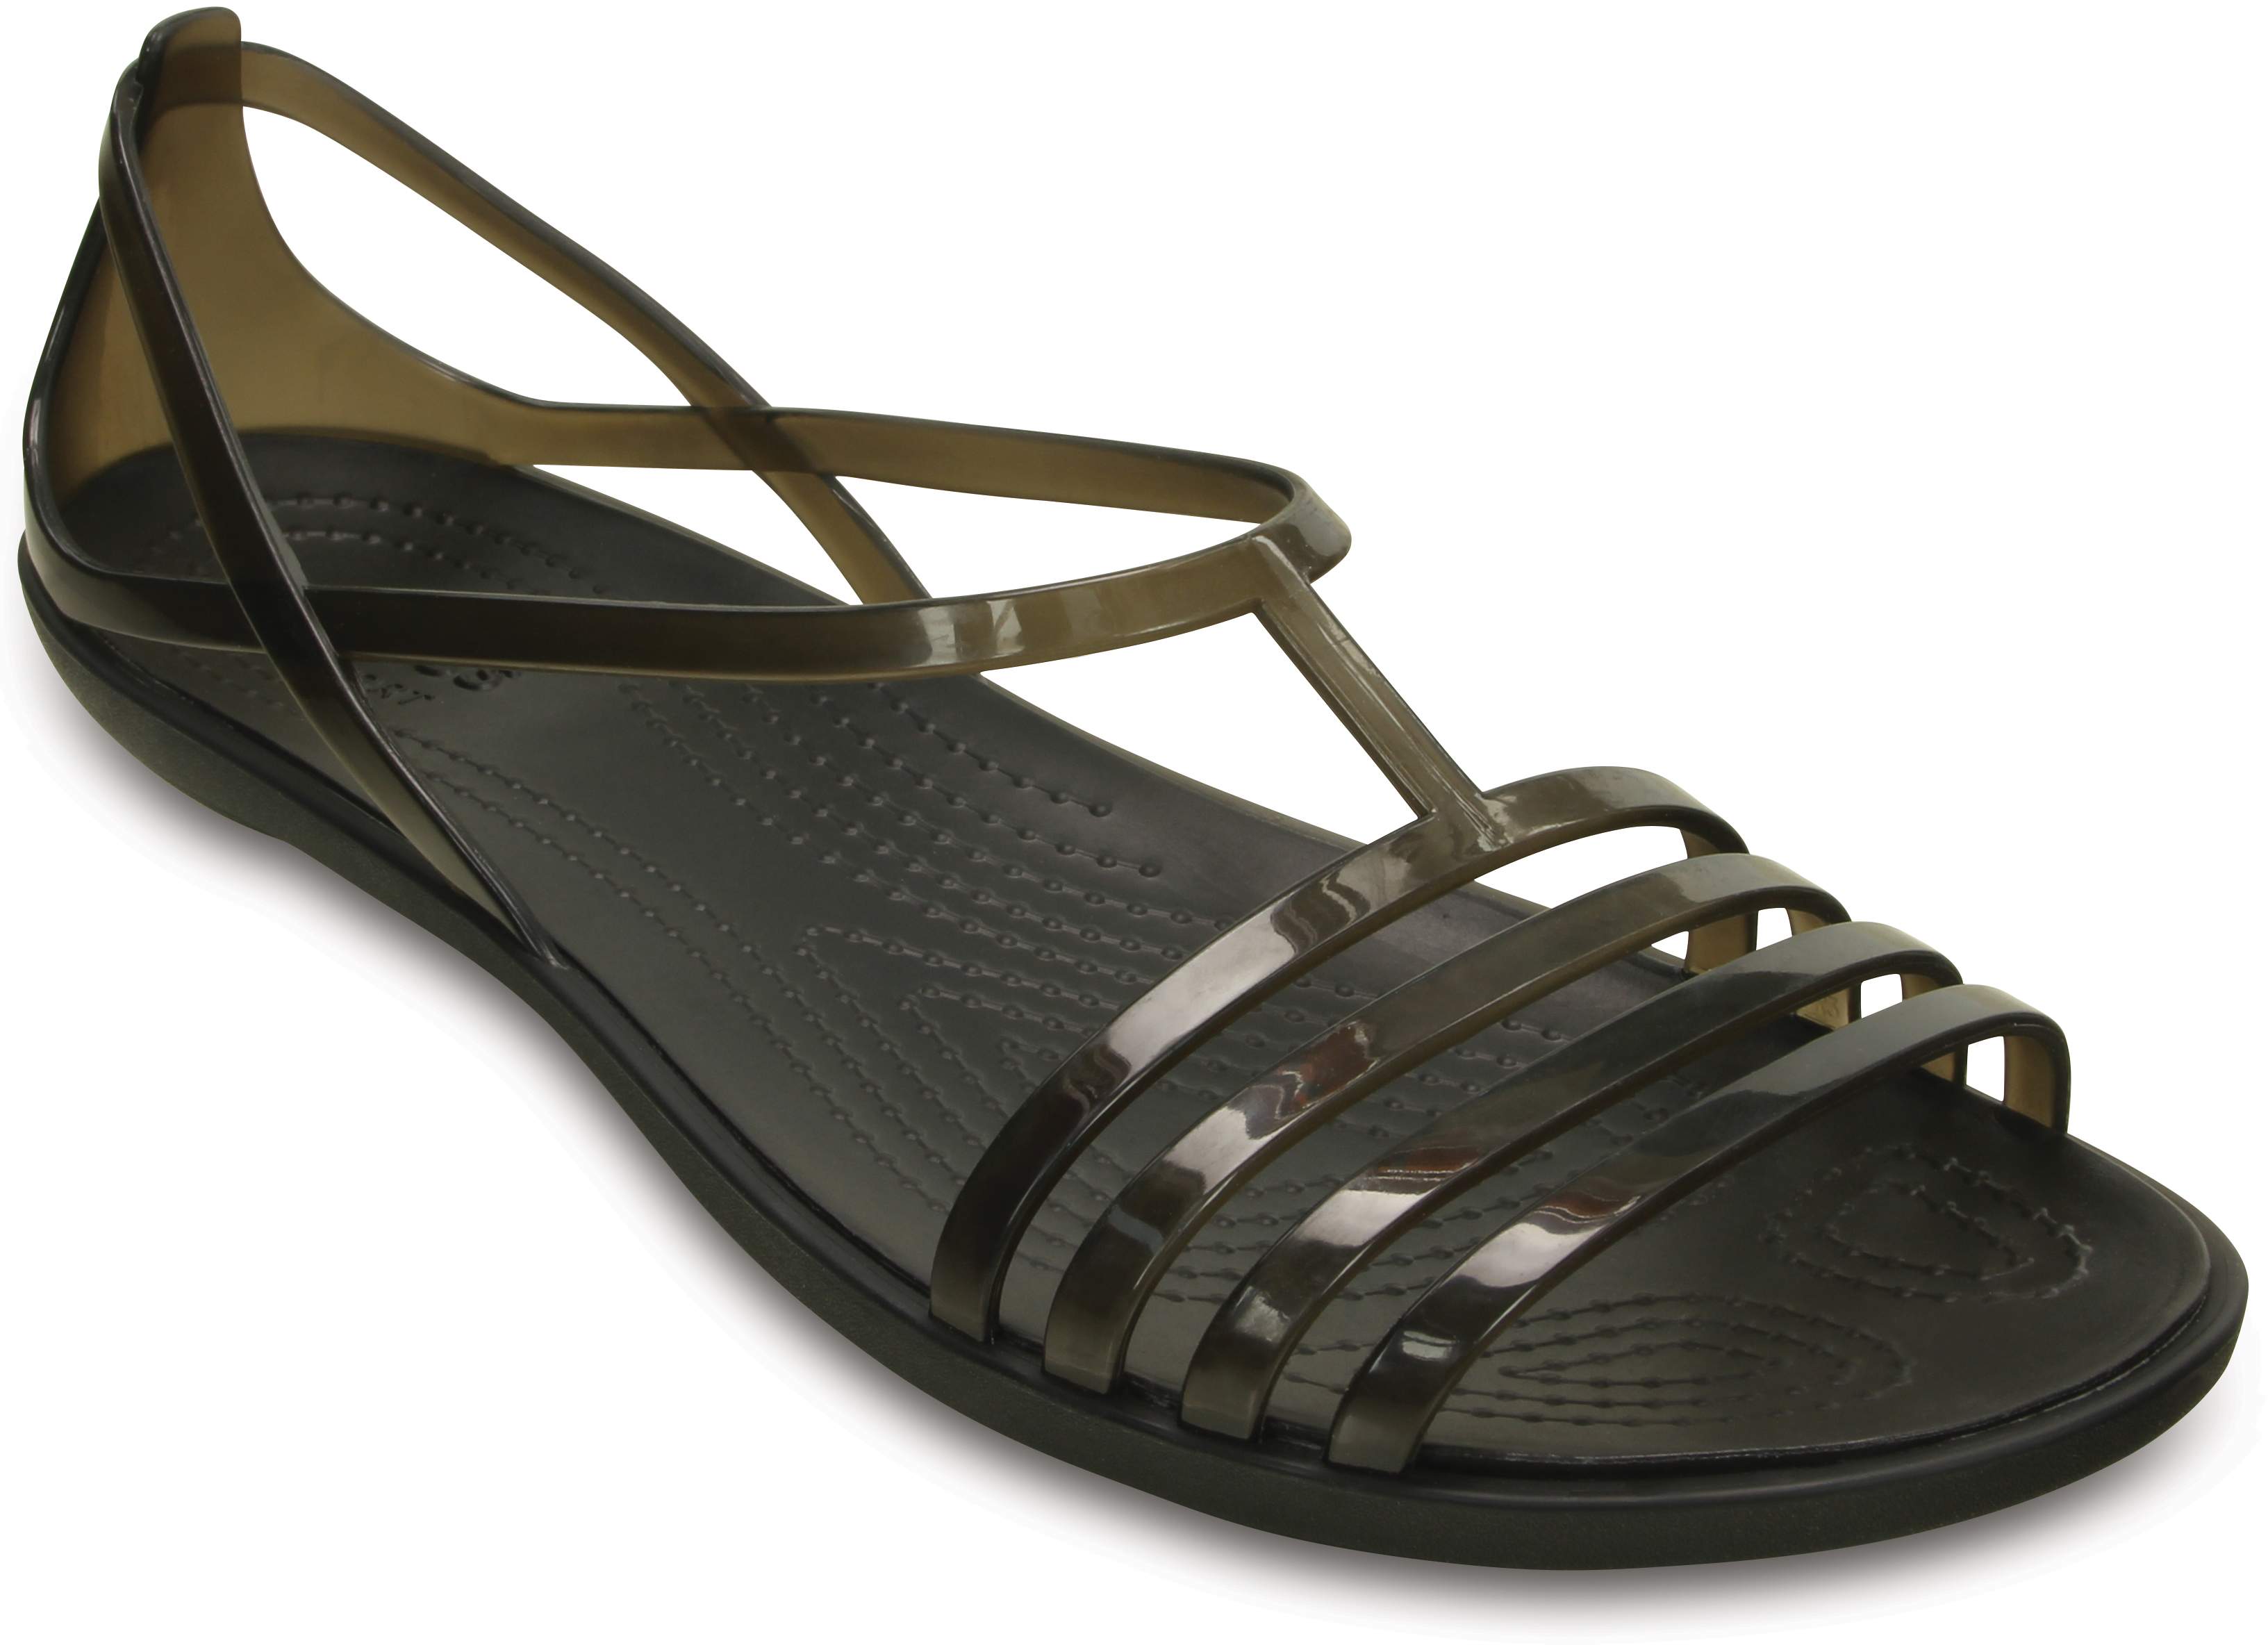 crocs isabella women's sandals